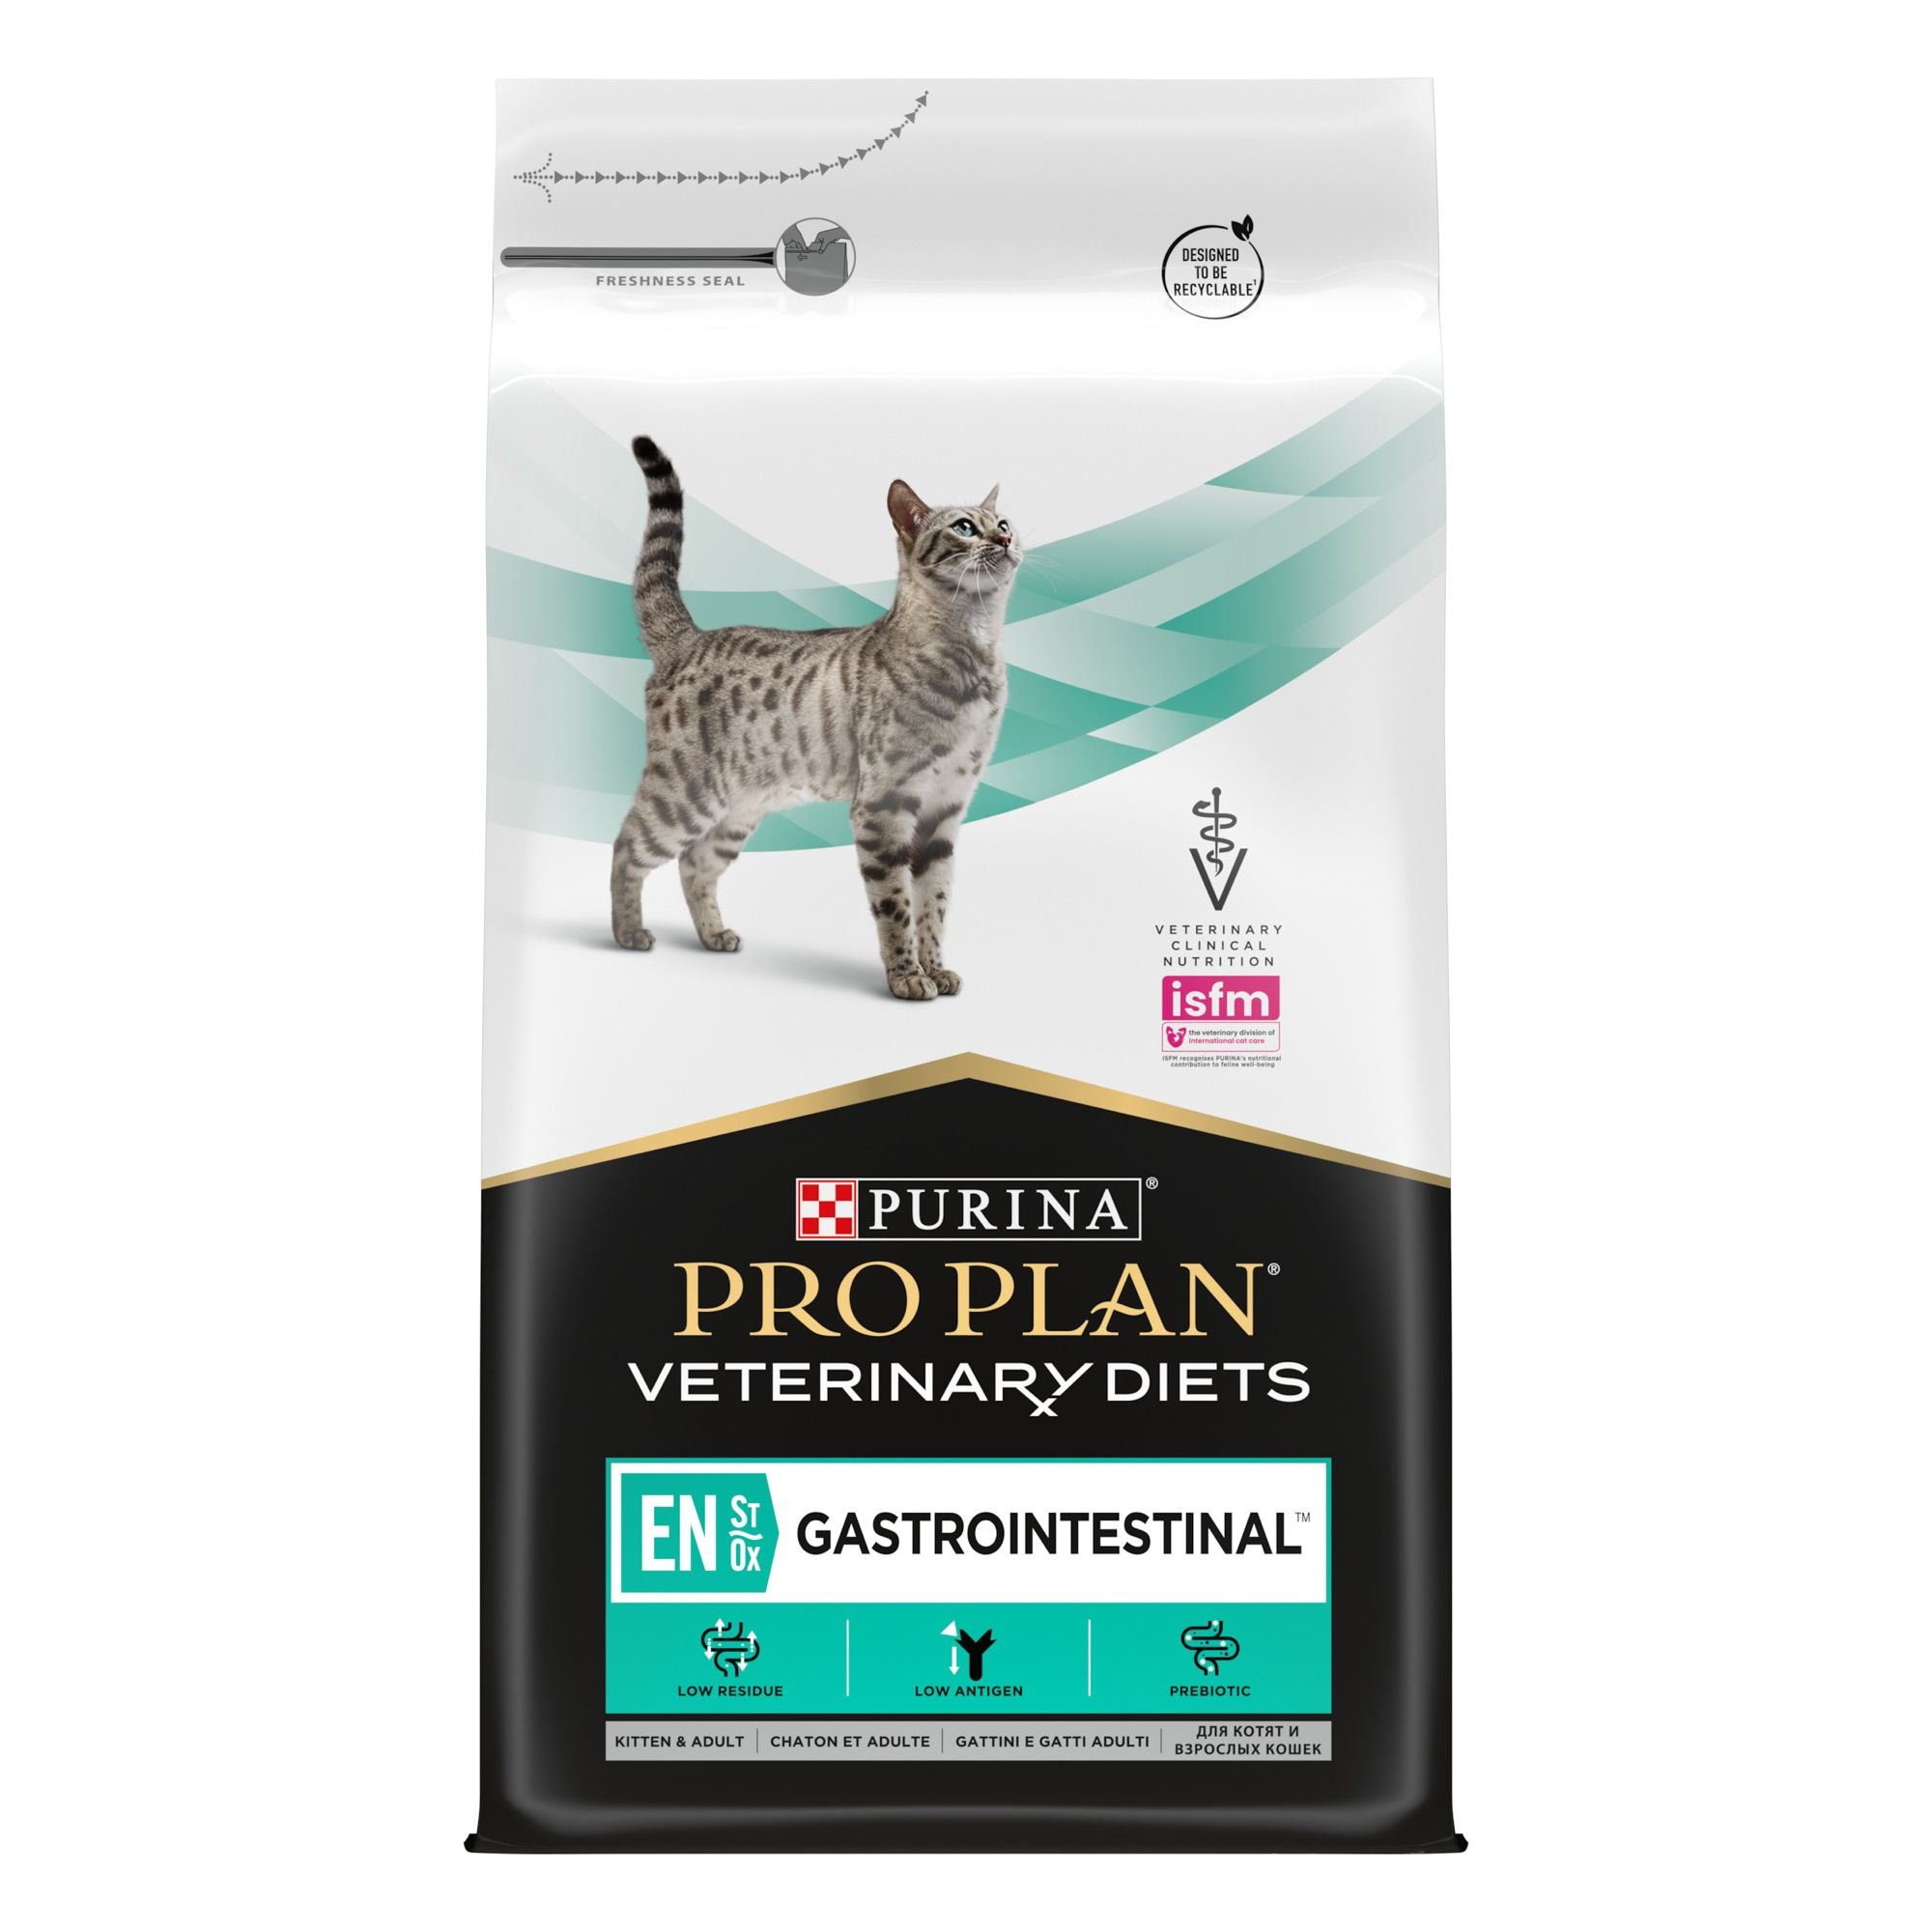 Сухой корм для кошек при заболеваниях желудочно-кишечного тракта Purina Pro Plan Veterinary Diets EN Gastrointestinal, 5 кг - фото 2